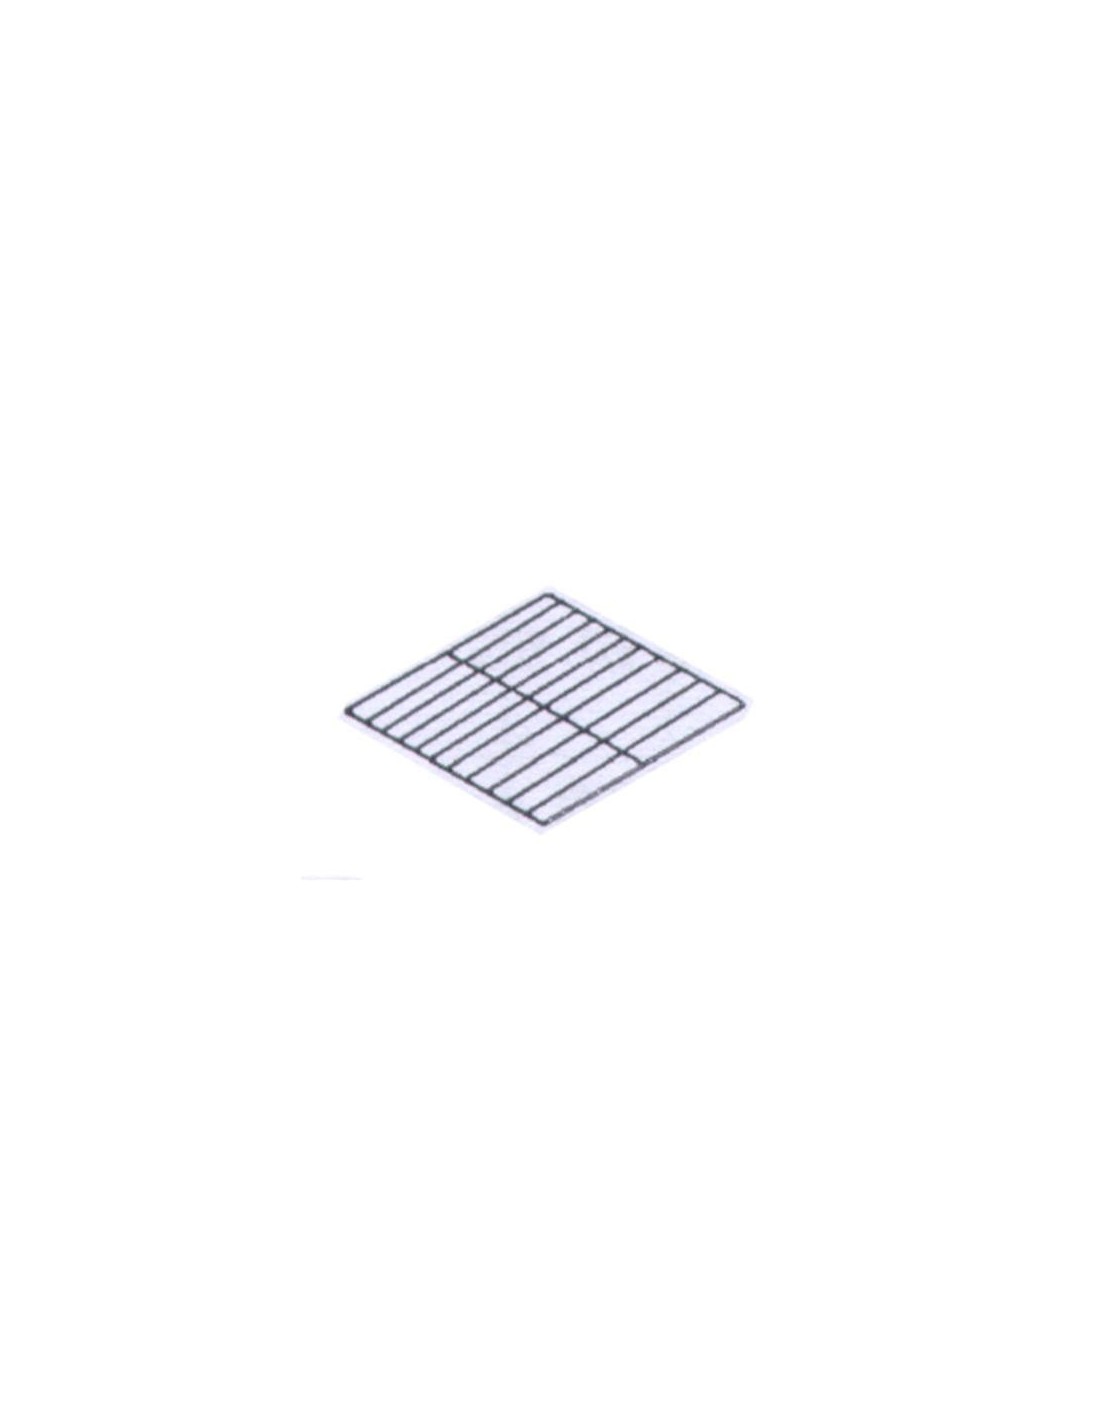 Plasticized grid for Model PA800